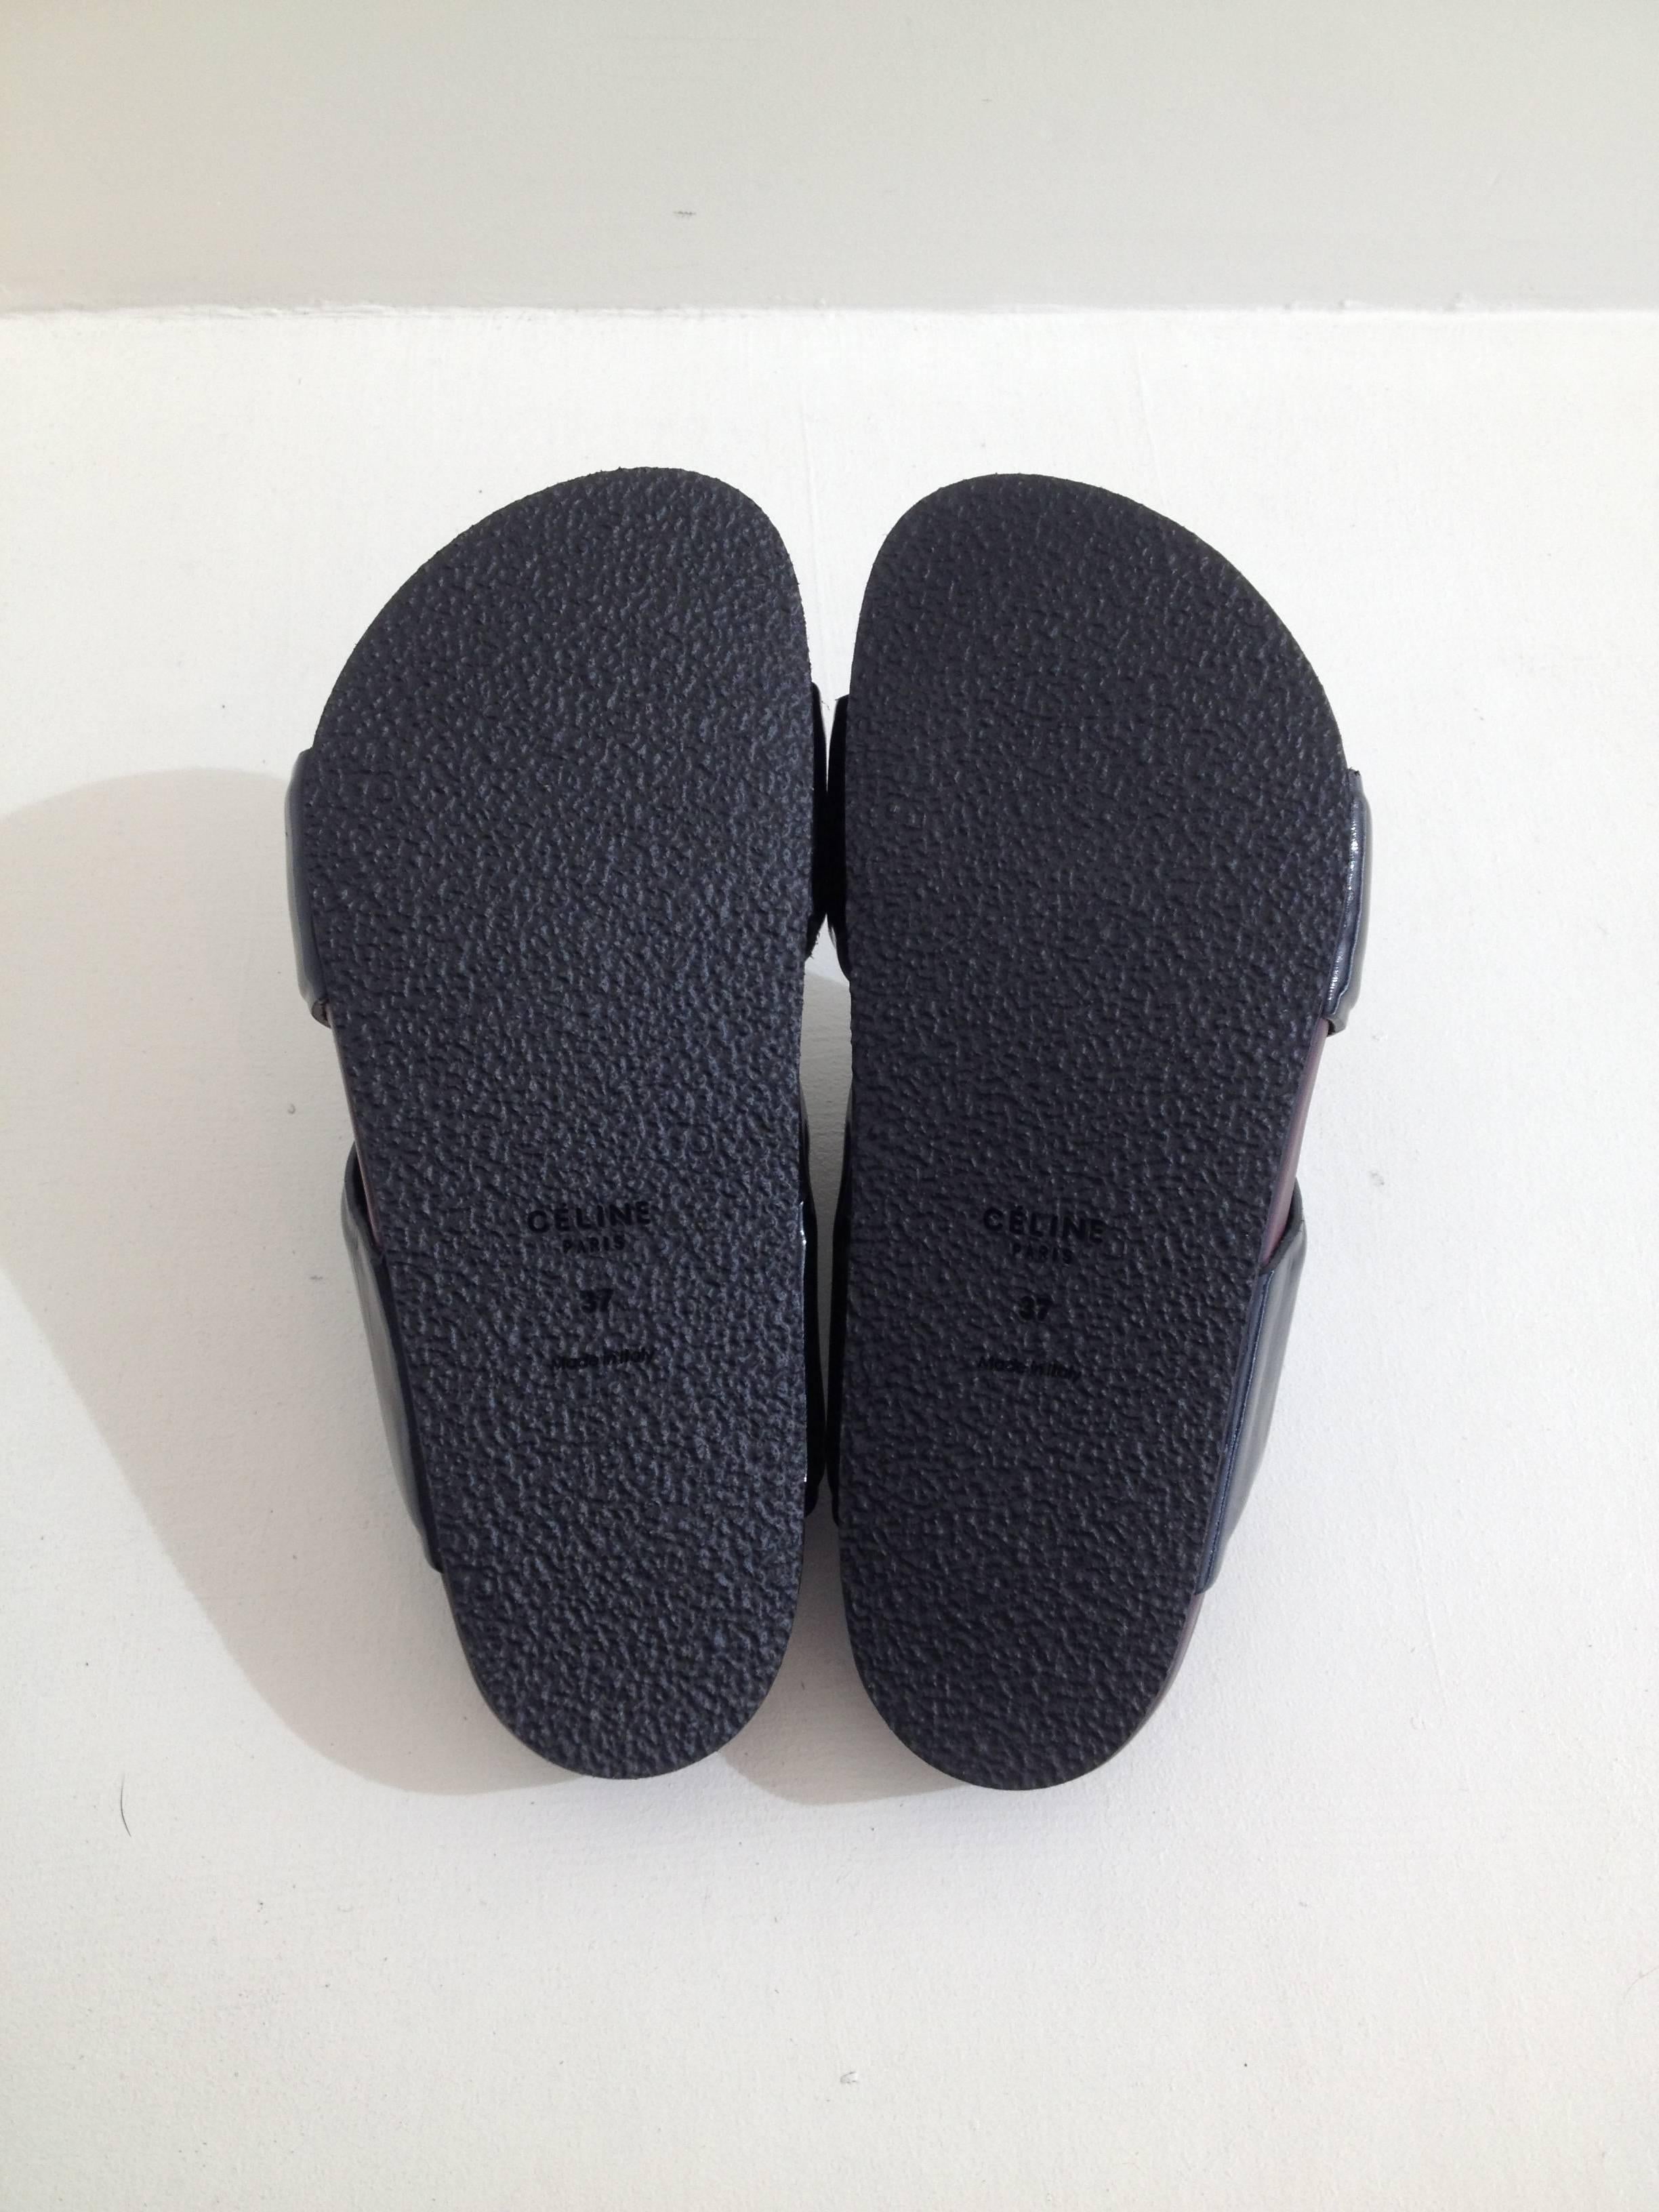 Women's Celine Black and Burgundy Slides Size 37 (6.5)